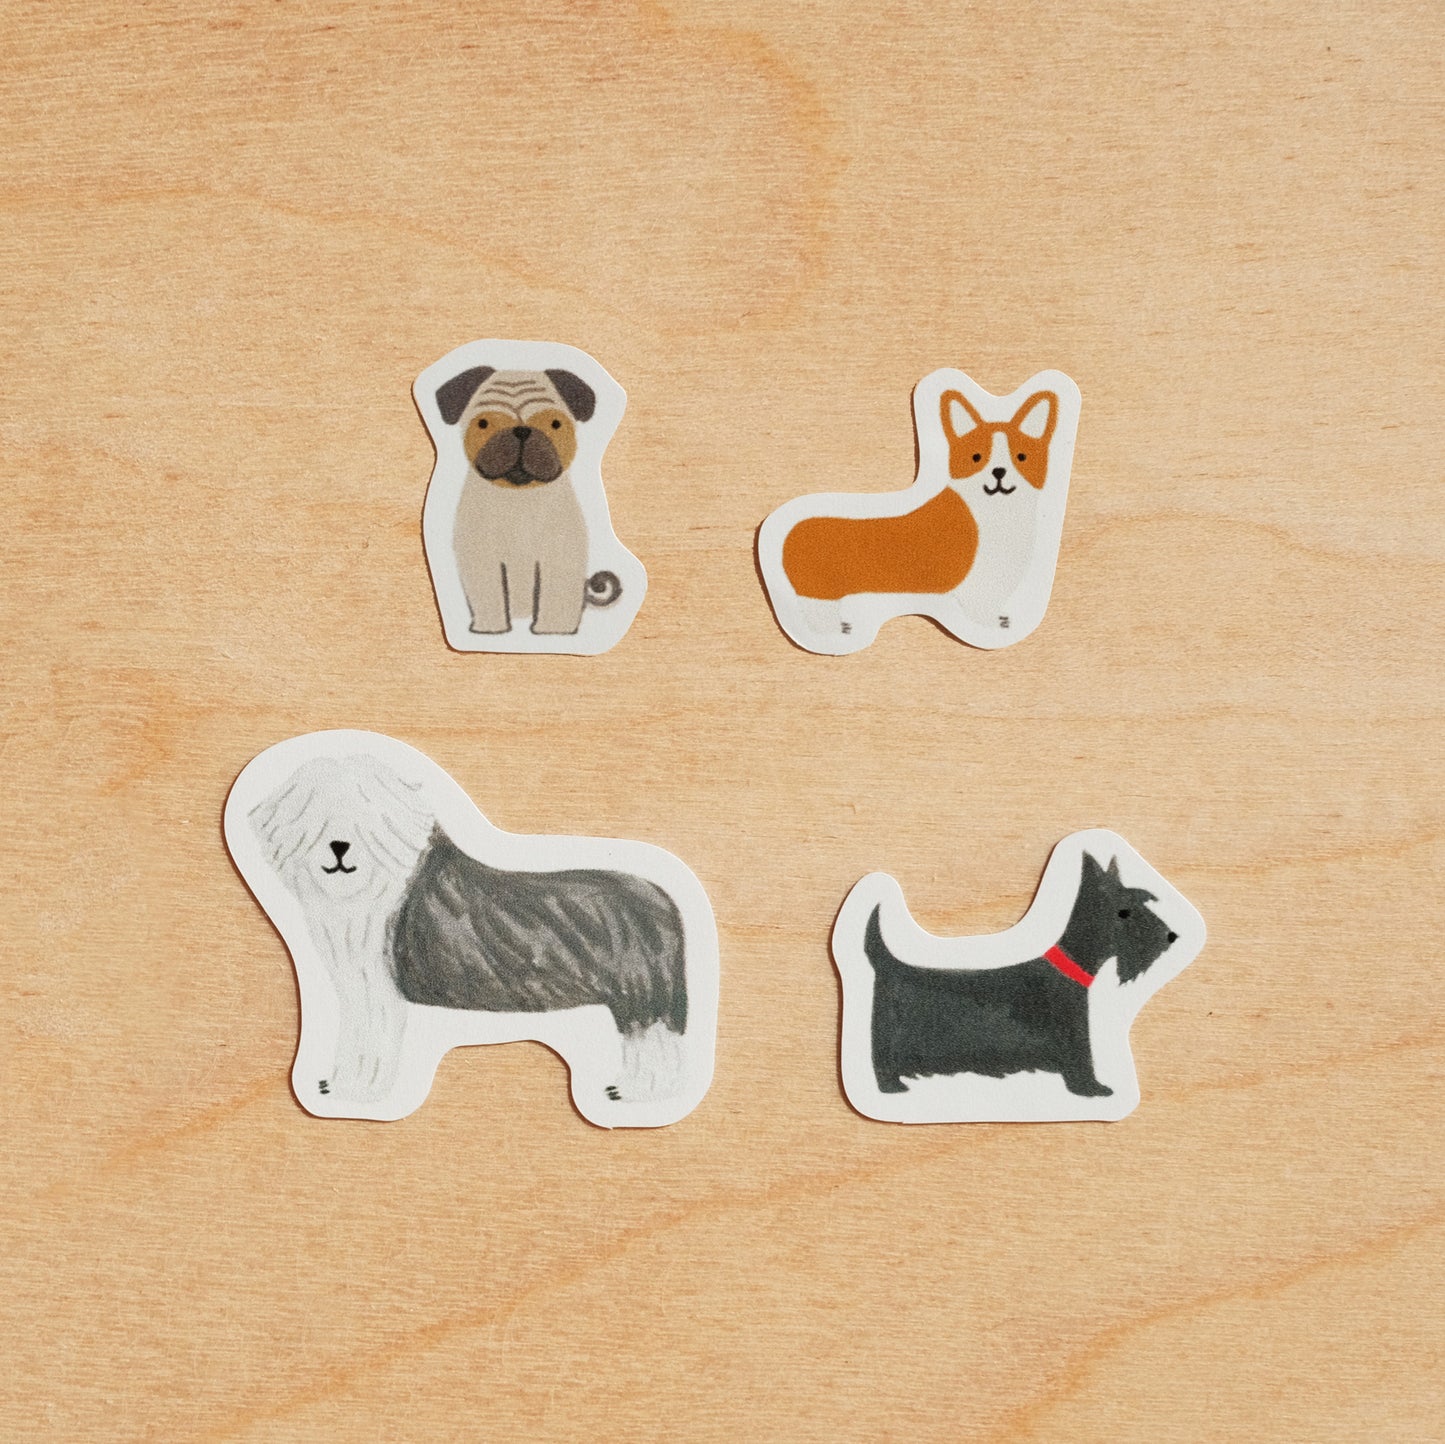 Dog Alphabet Sticker Sheet